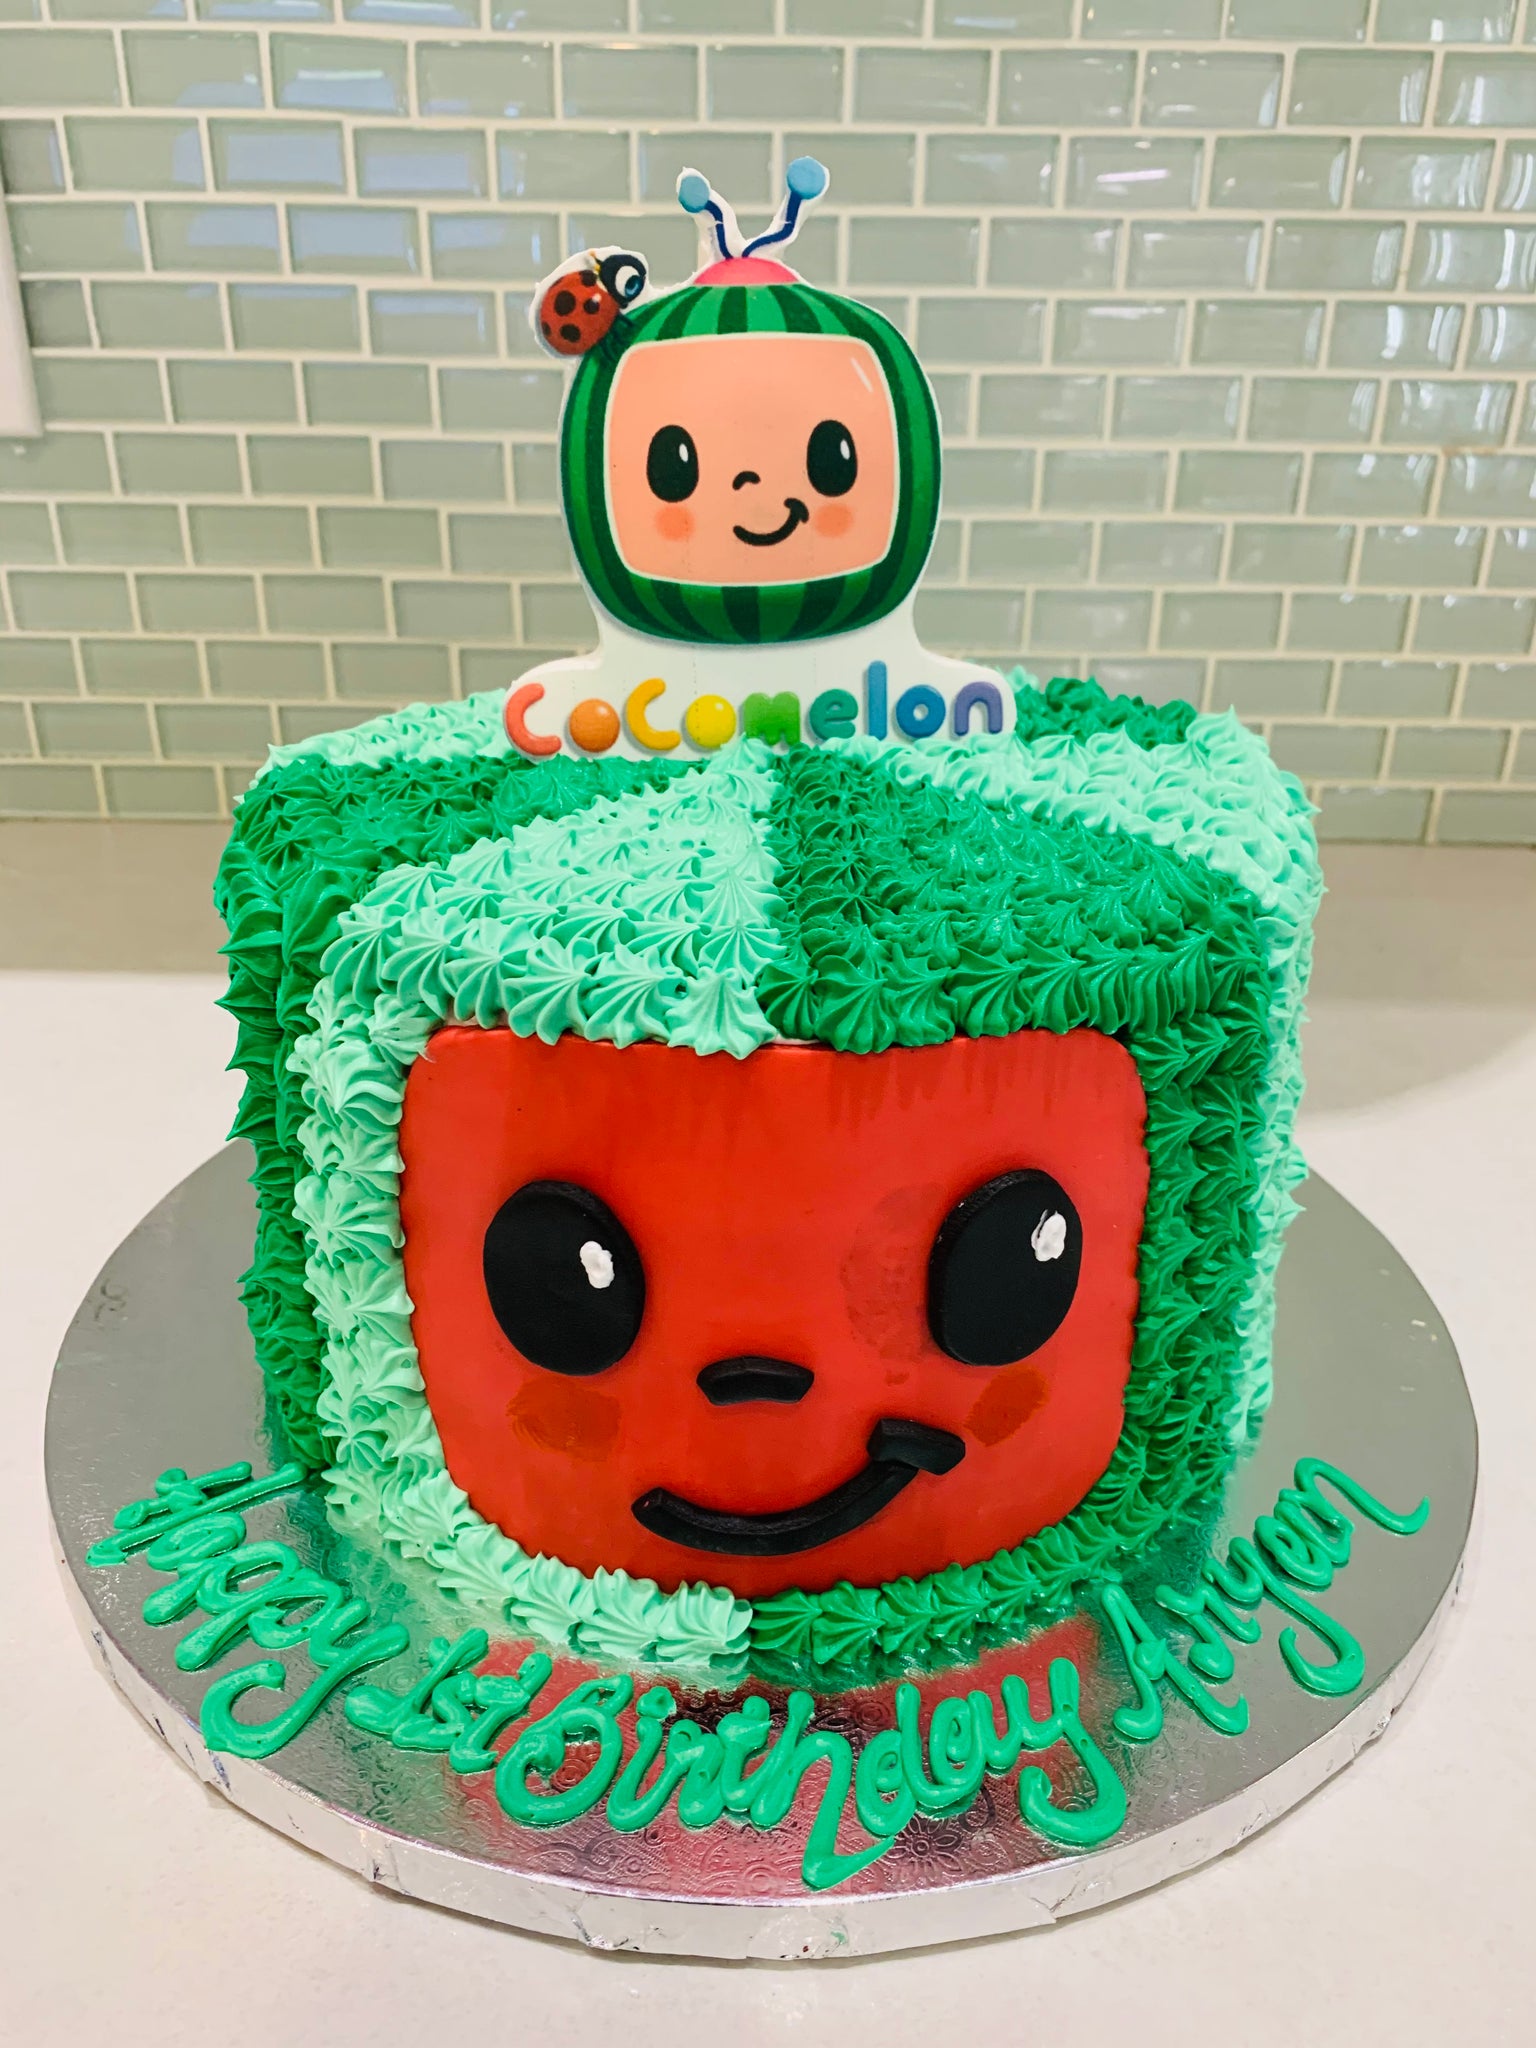 COCOMELON CREAM BIRTHDAY CAKE - IMG 4634 2048x2048